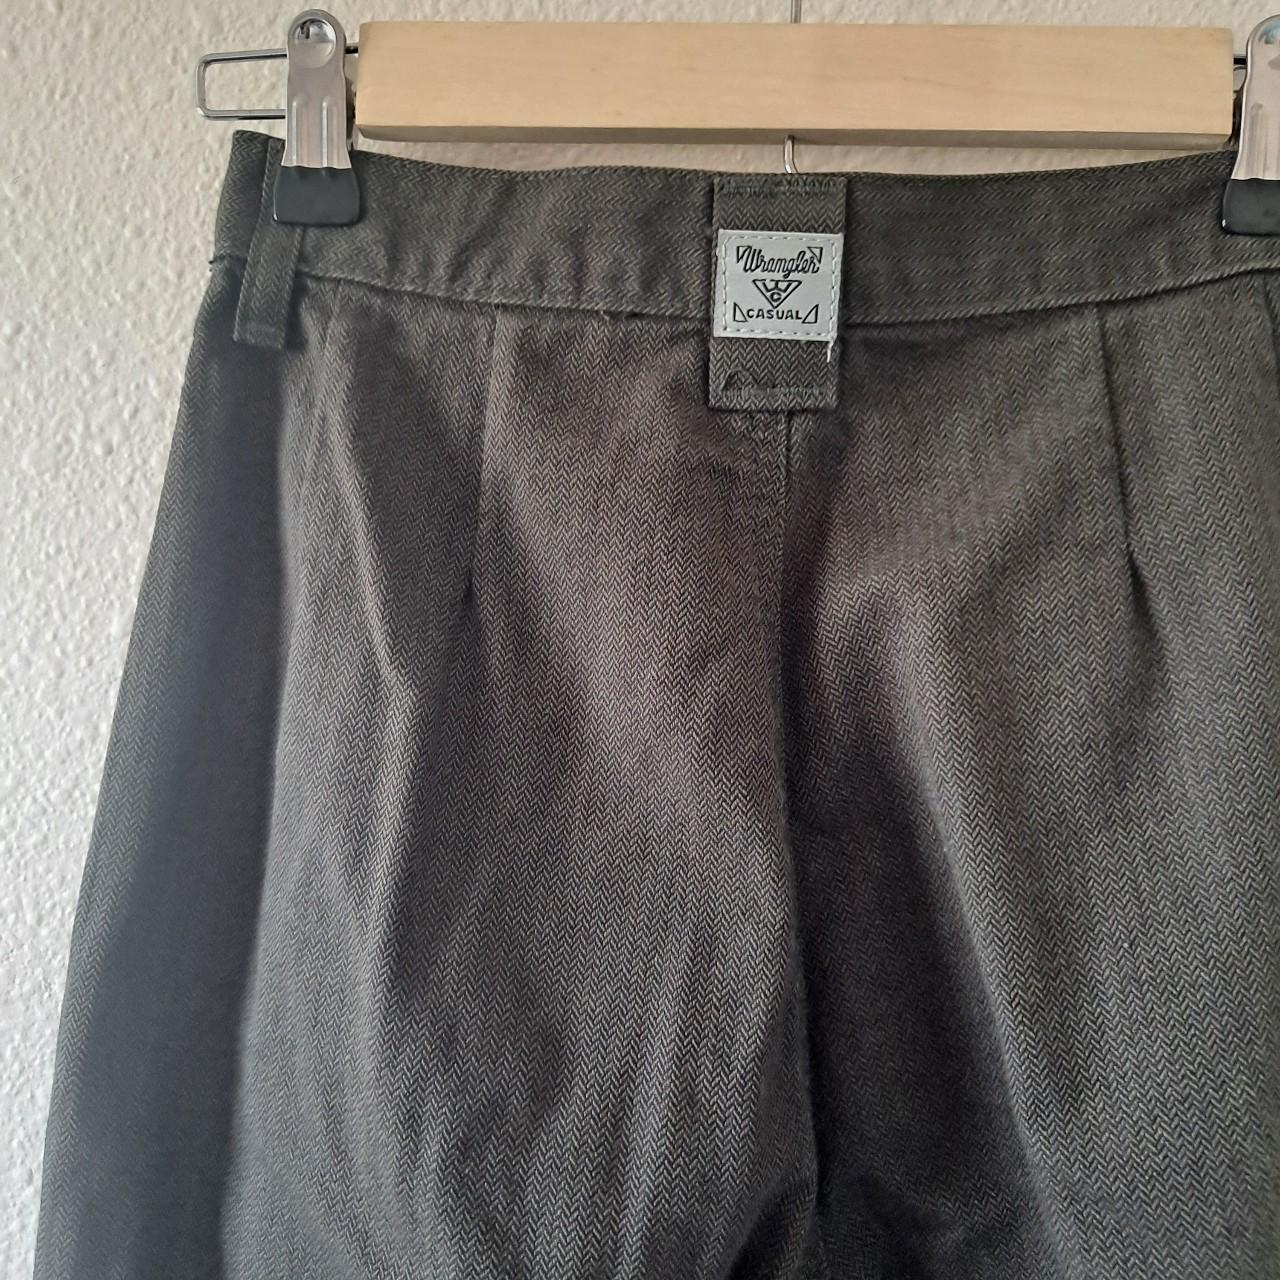 4×34 Cool vintage Wrangler trousers, probably fits... - Depop